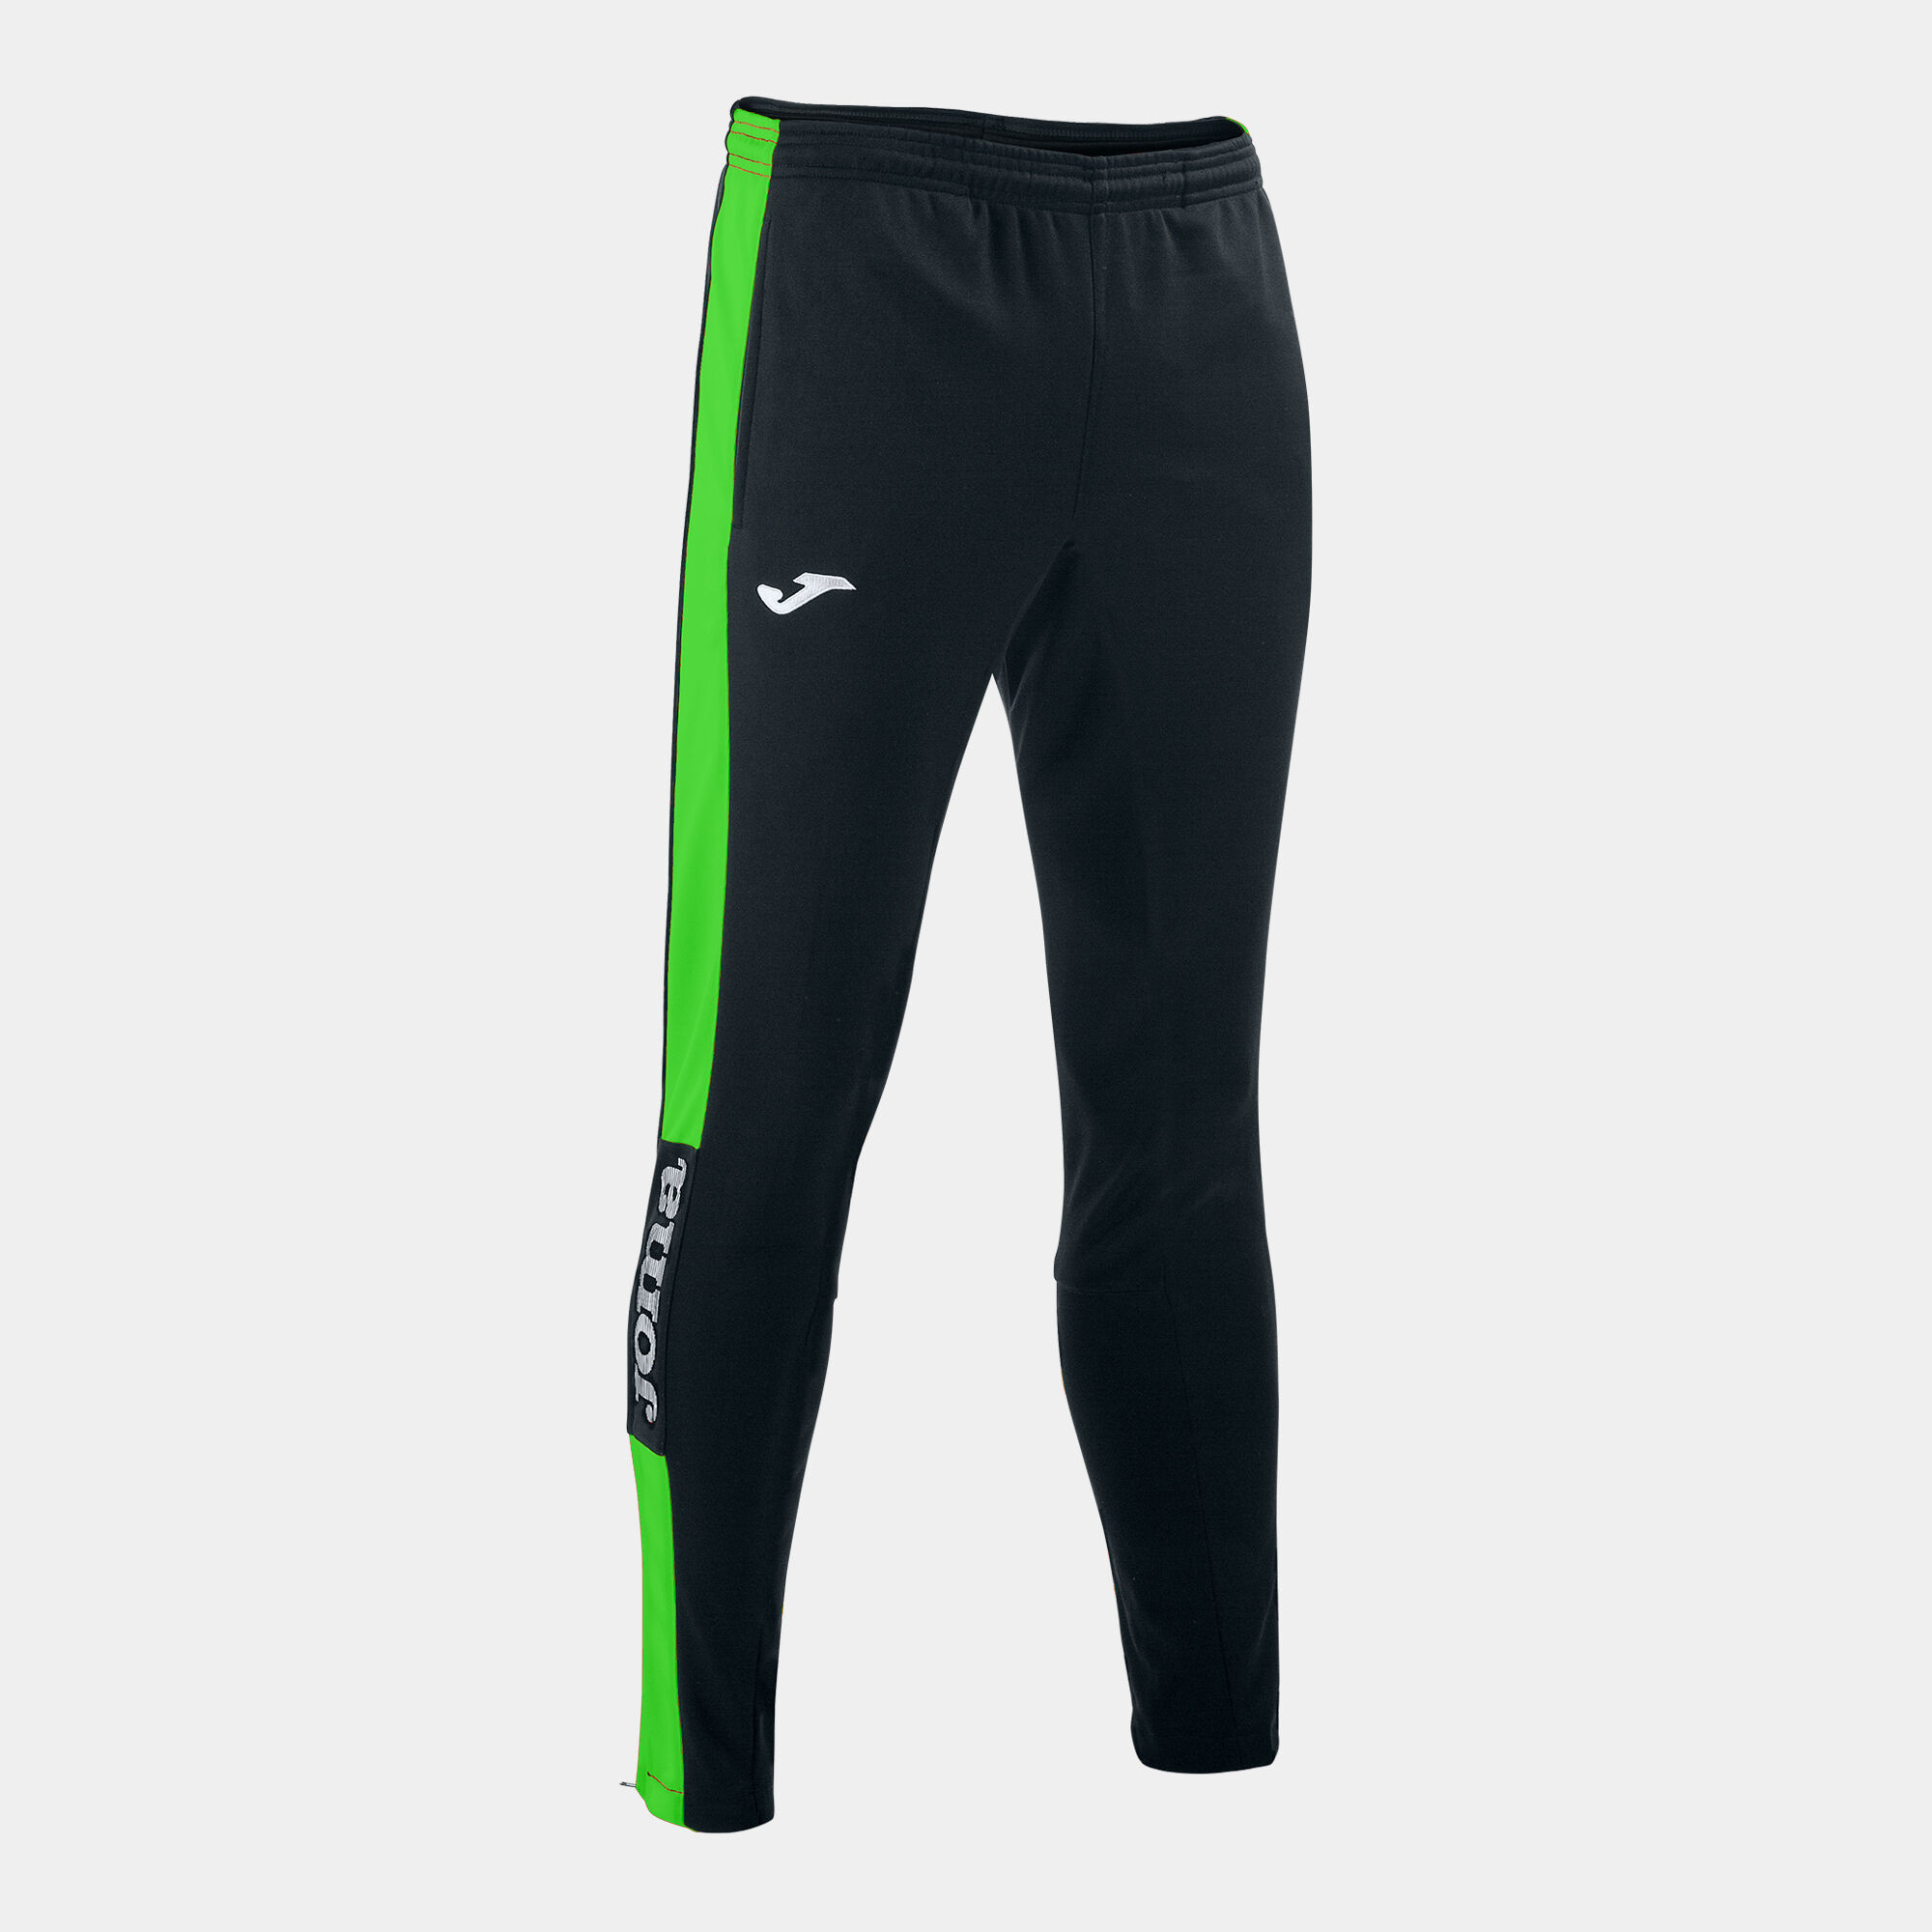 Longs pants man Championship IV black fluorescent green